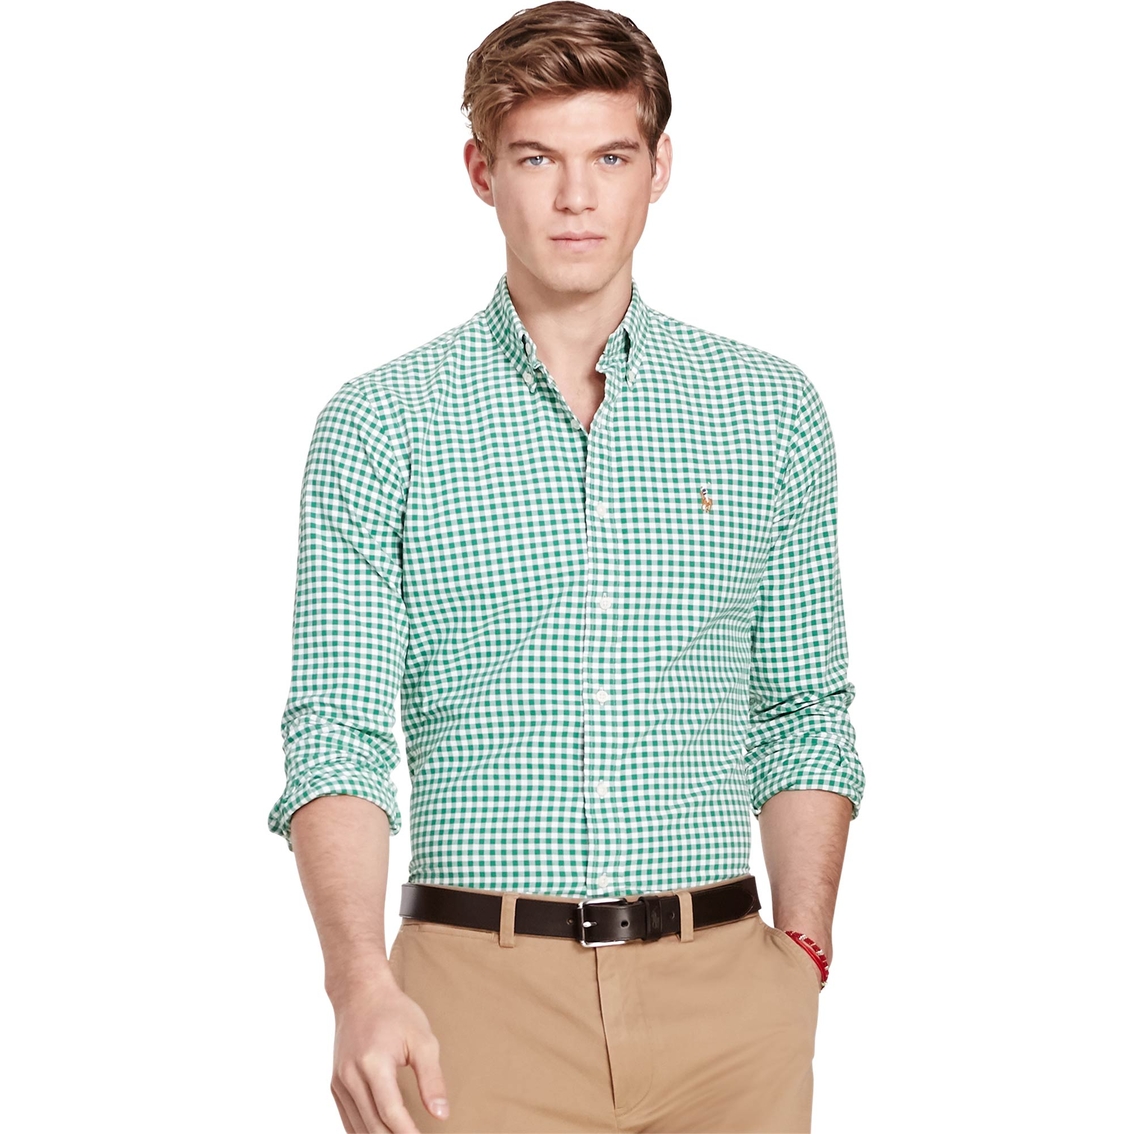 Polo Ralph Lauren Gingham Oxford Shirt | Shirts | Clothing ...